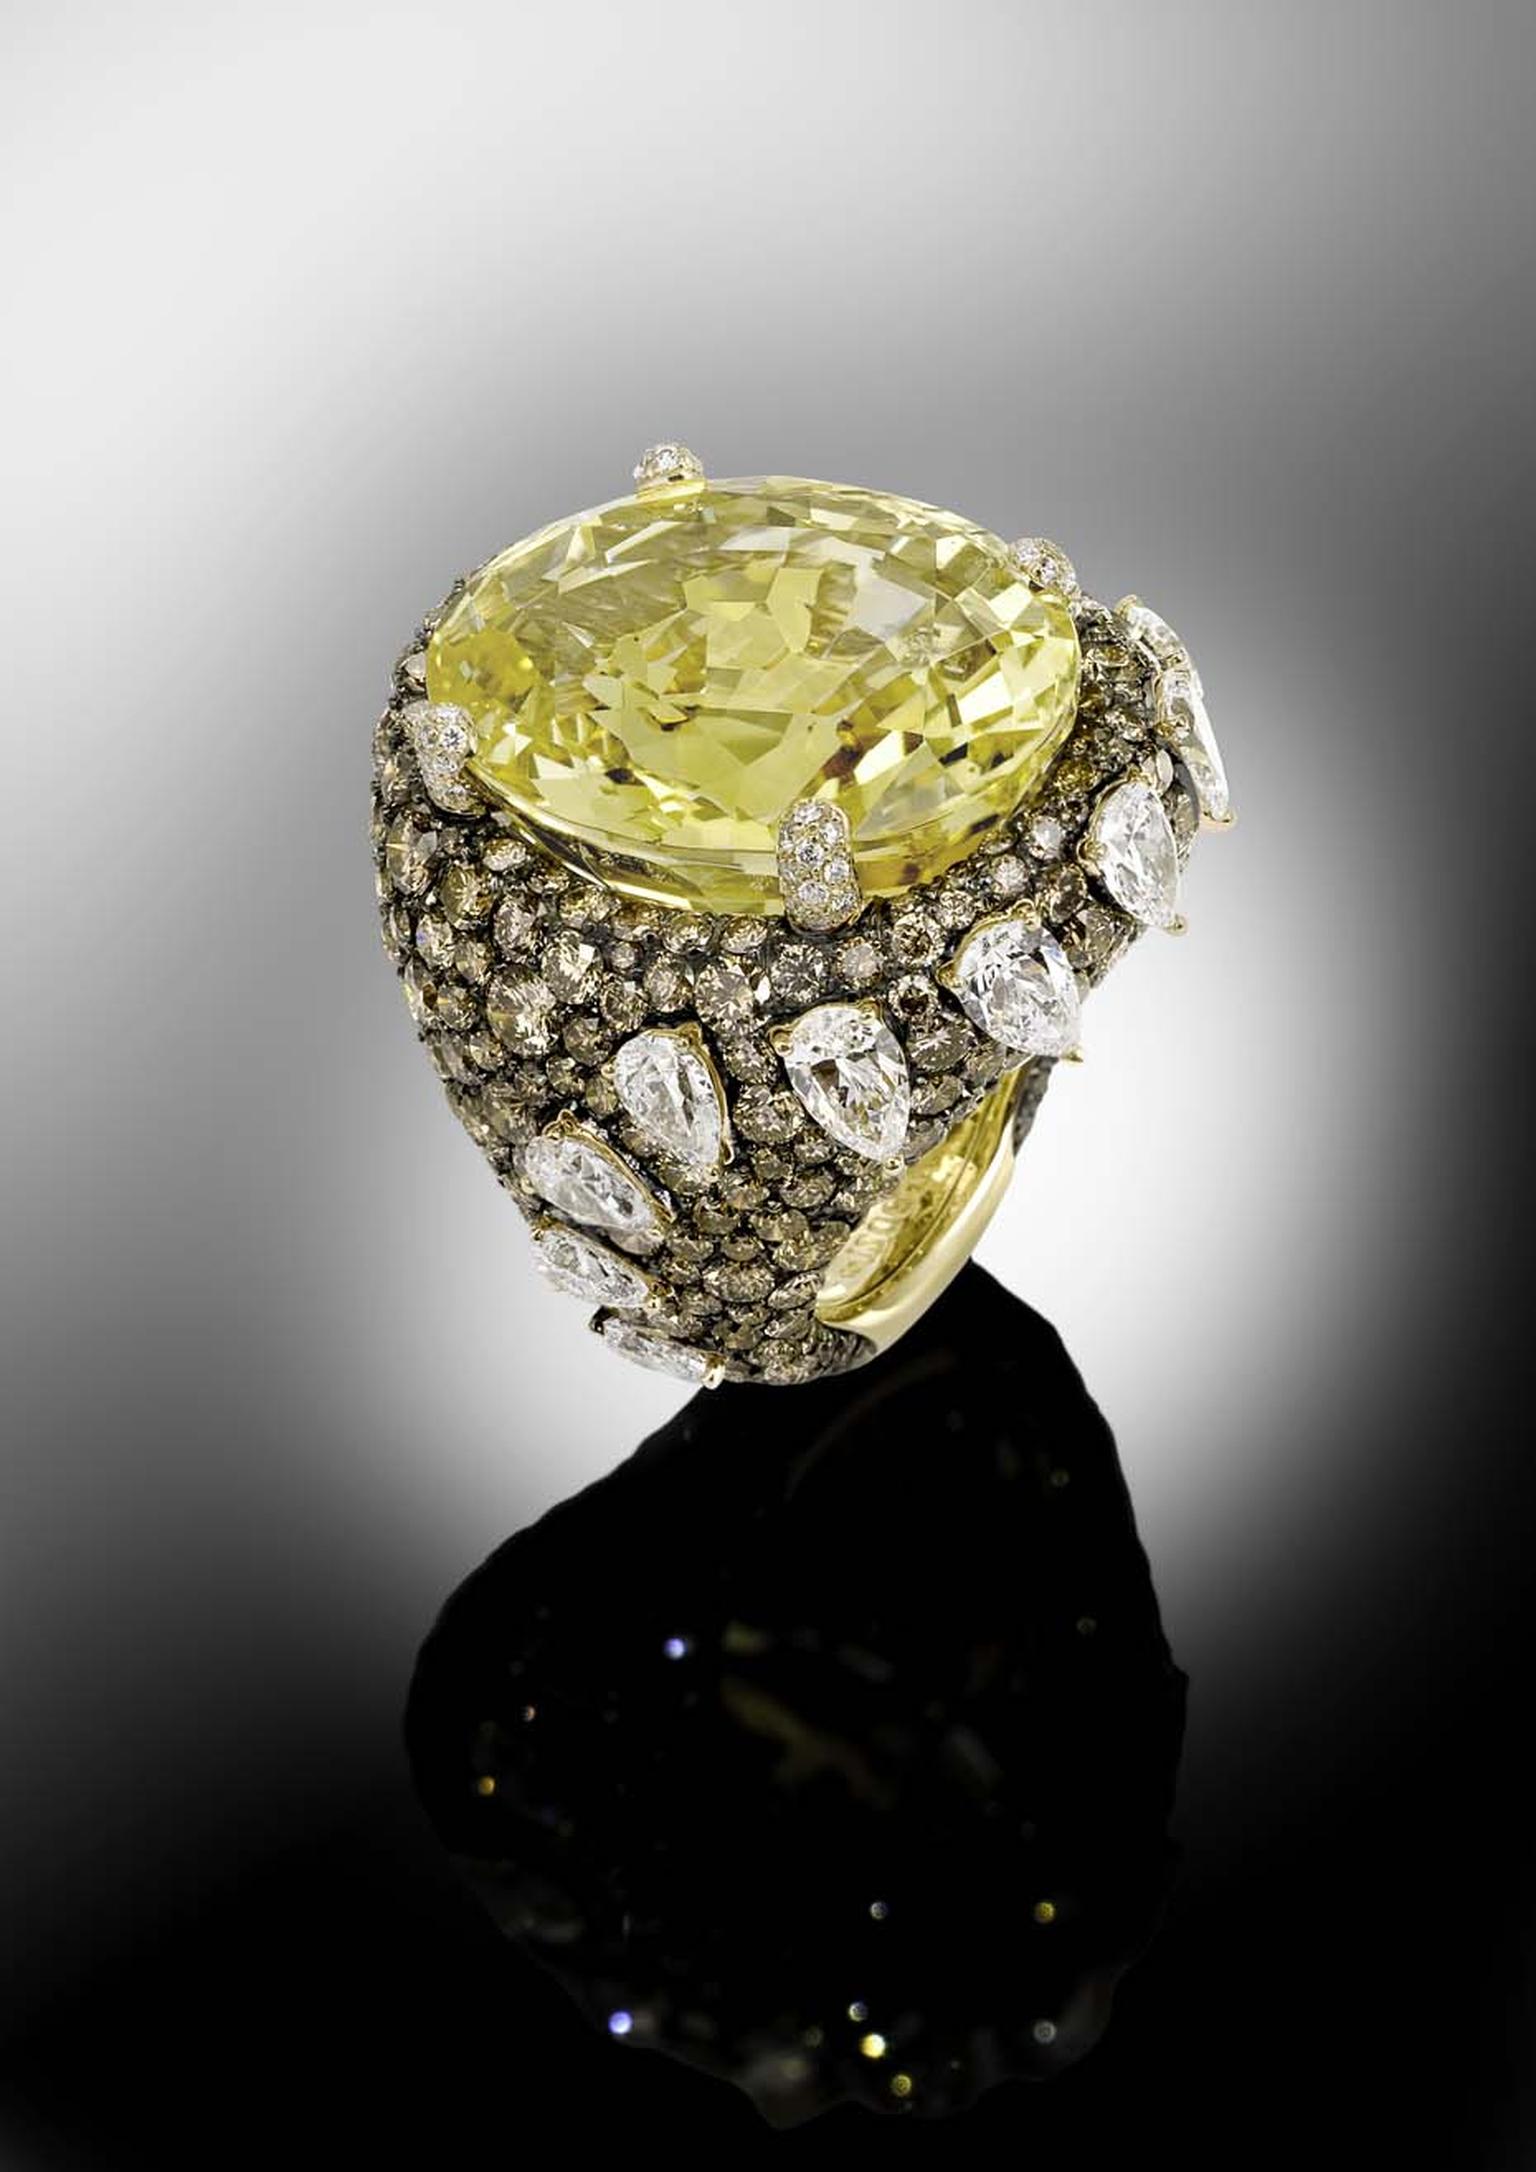 The de GRISOGONO yellow sapphire ring worn by Toni Garrn, Leonardo di Caprio's girlfriend, to the Eden Roc party hosted by de GRISOGONO